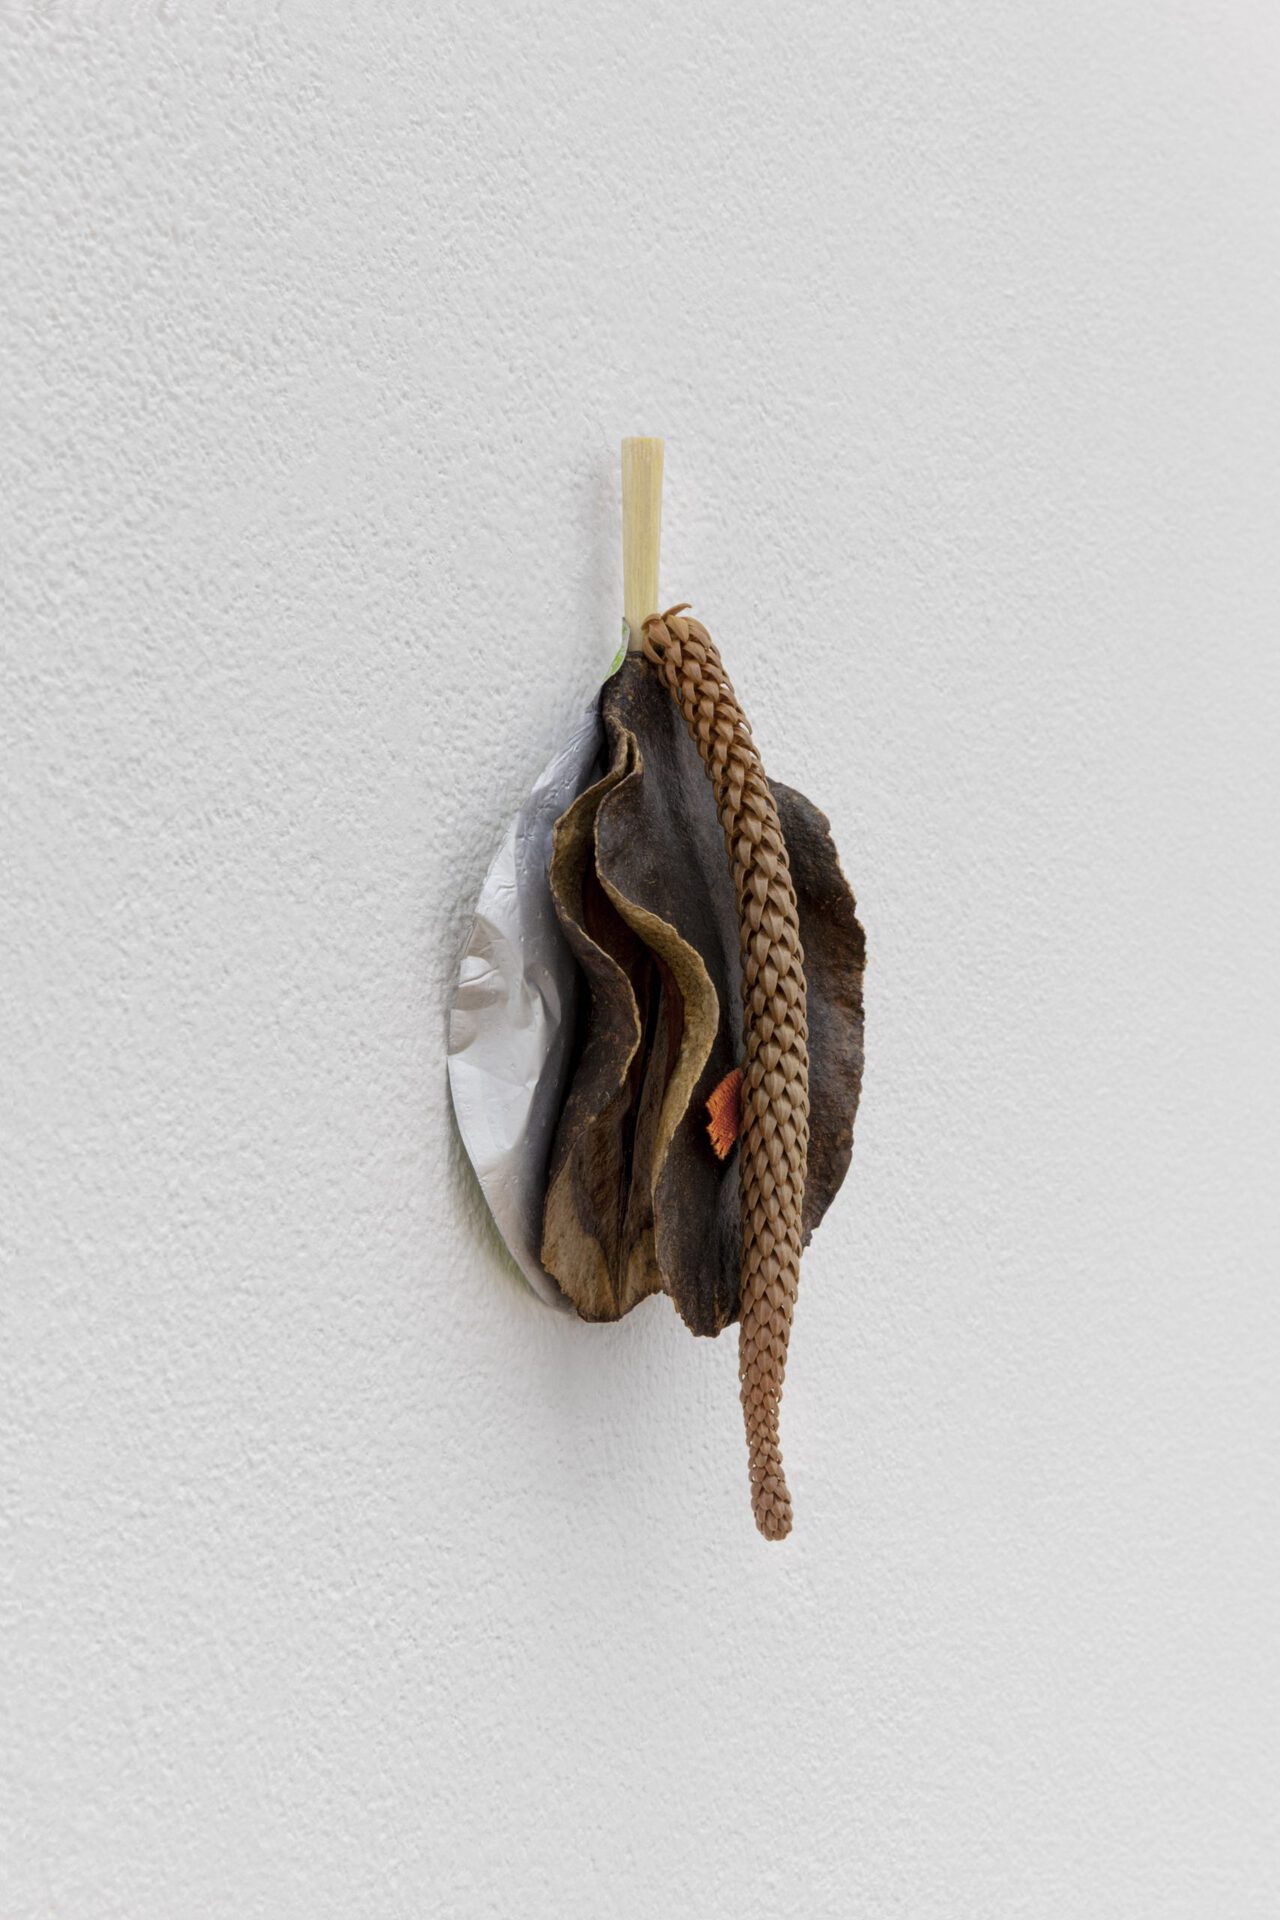 David Fesl, Untitled, 2022, Aluminum yogurt cup lid, bamboo chopstick, dried seeded fruit, parasitic plant, cloth, 13.9 × 6.4 × 2.9 cm